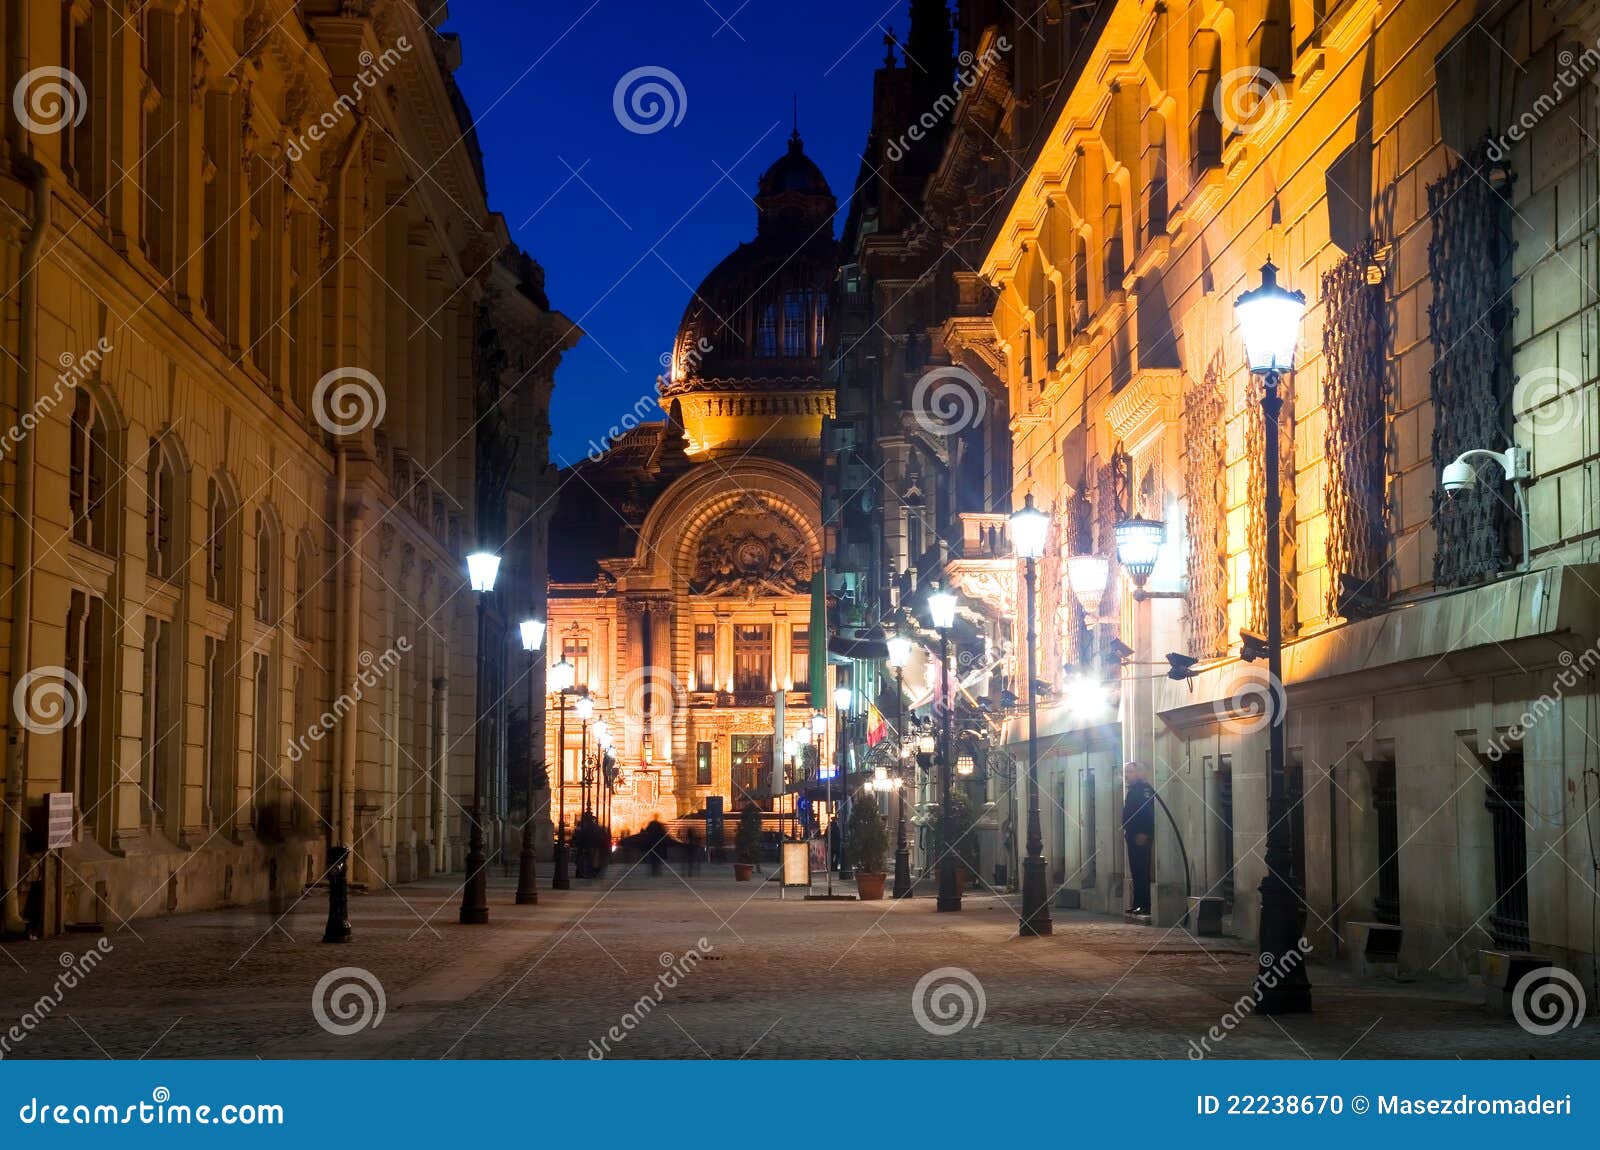 bucharest - historic center by night